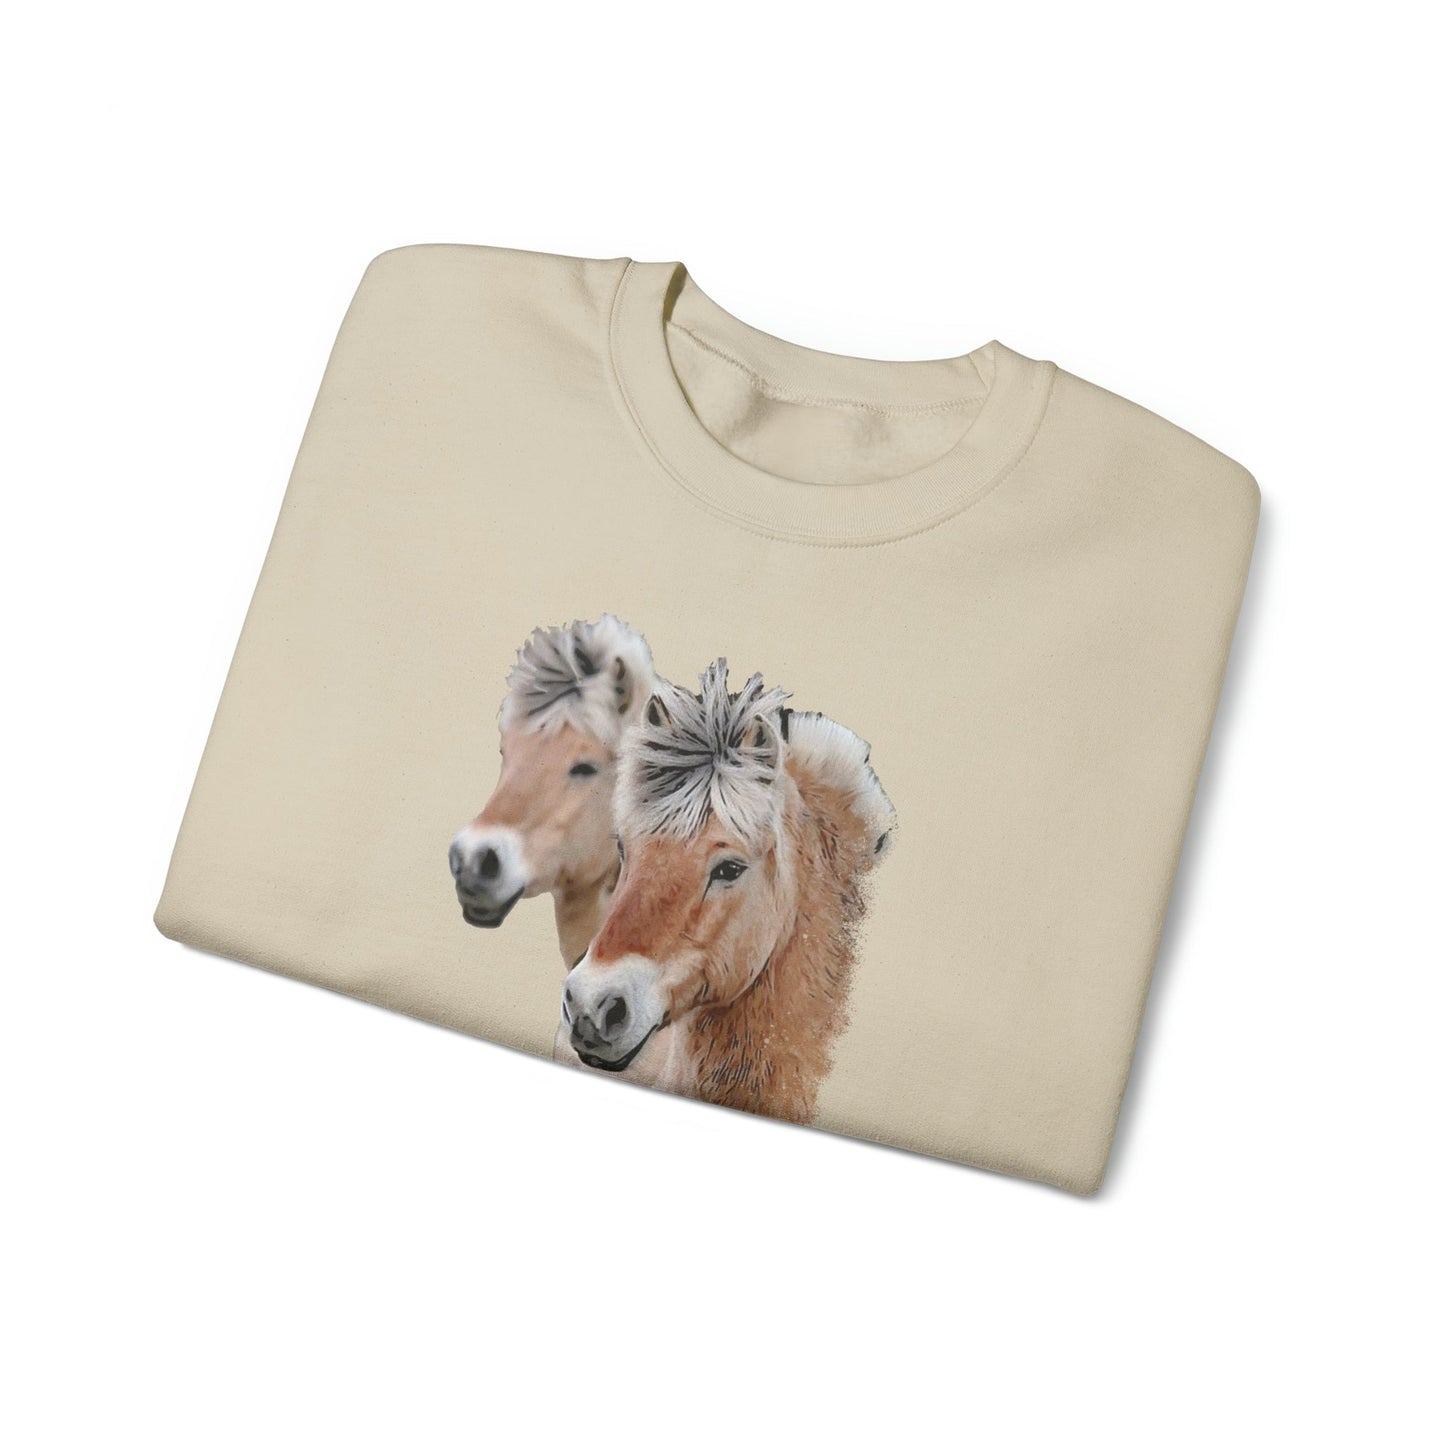 Fjord Horse Shirt, A Pair of Norwegian Fjord Horse Heads Sweatshirt, County Western Shirt - FlooredByArt